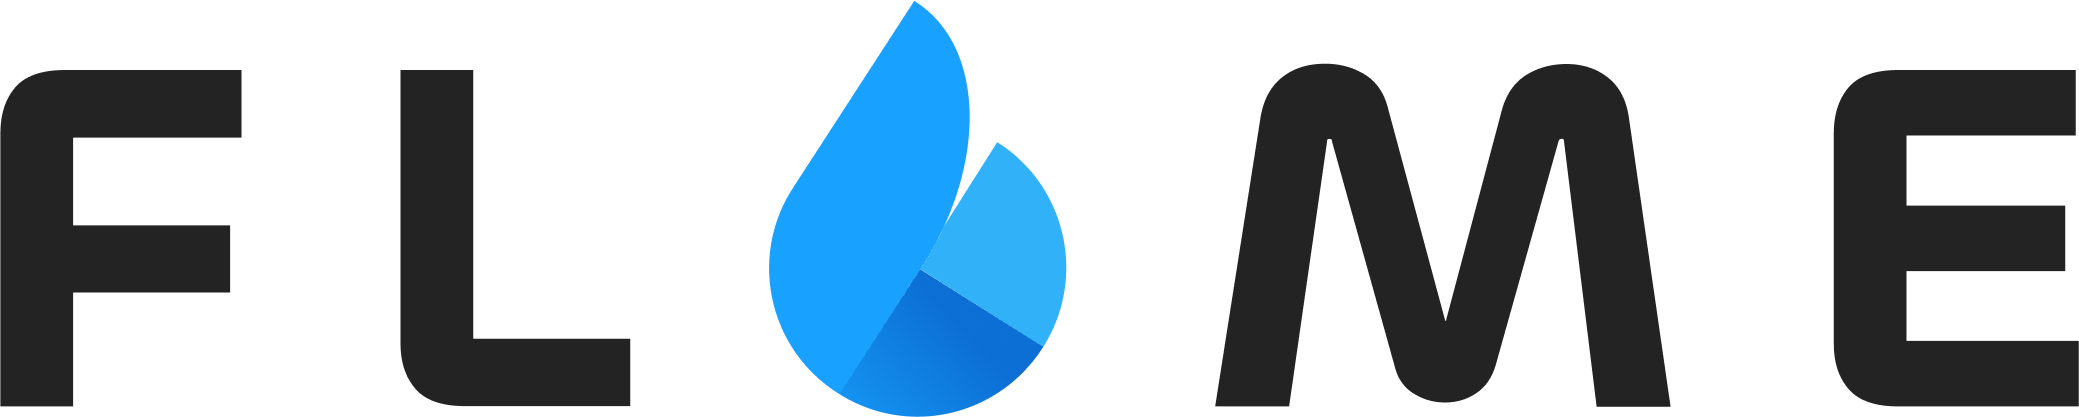 Flame Analytics logo